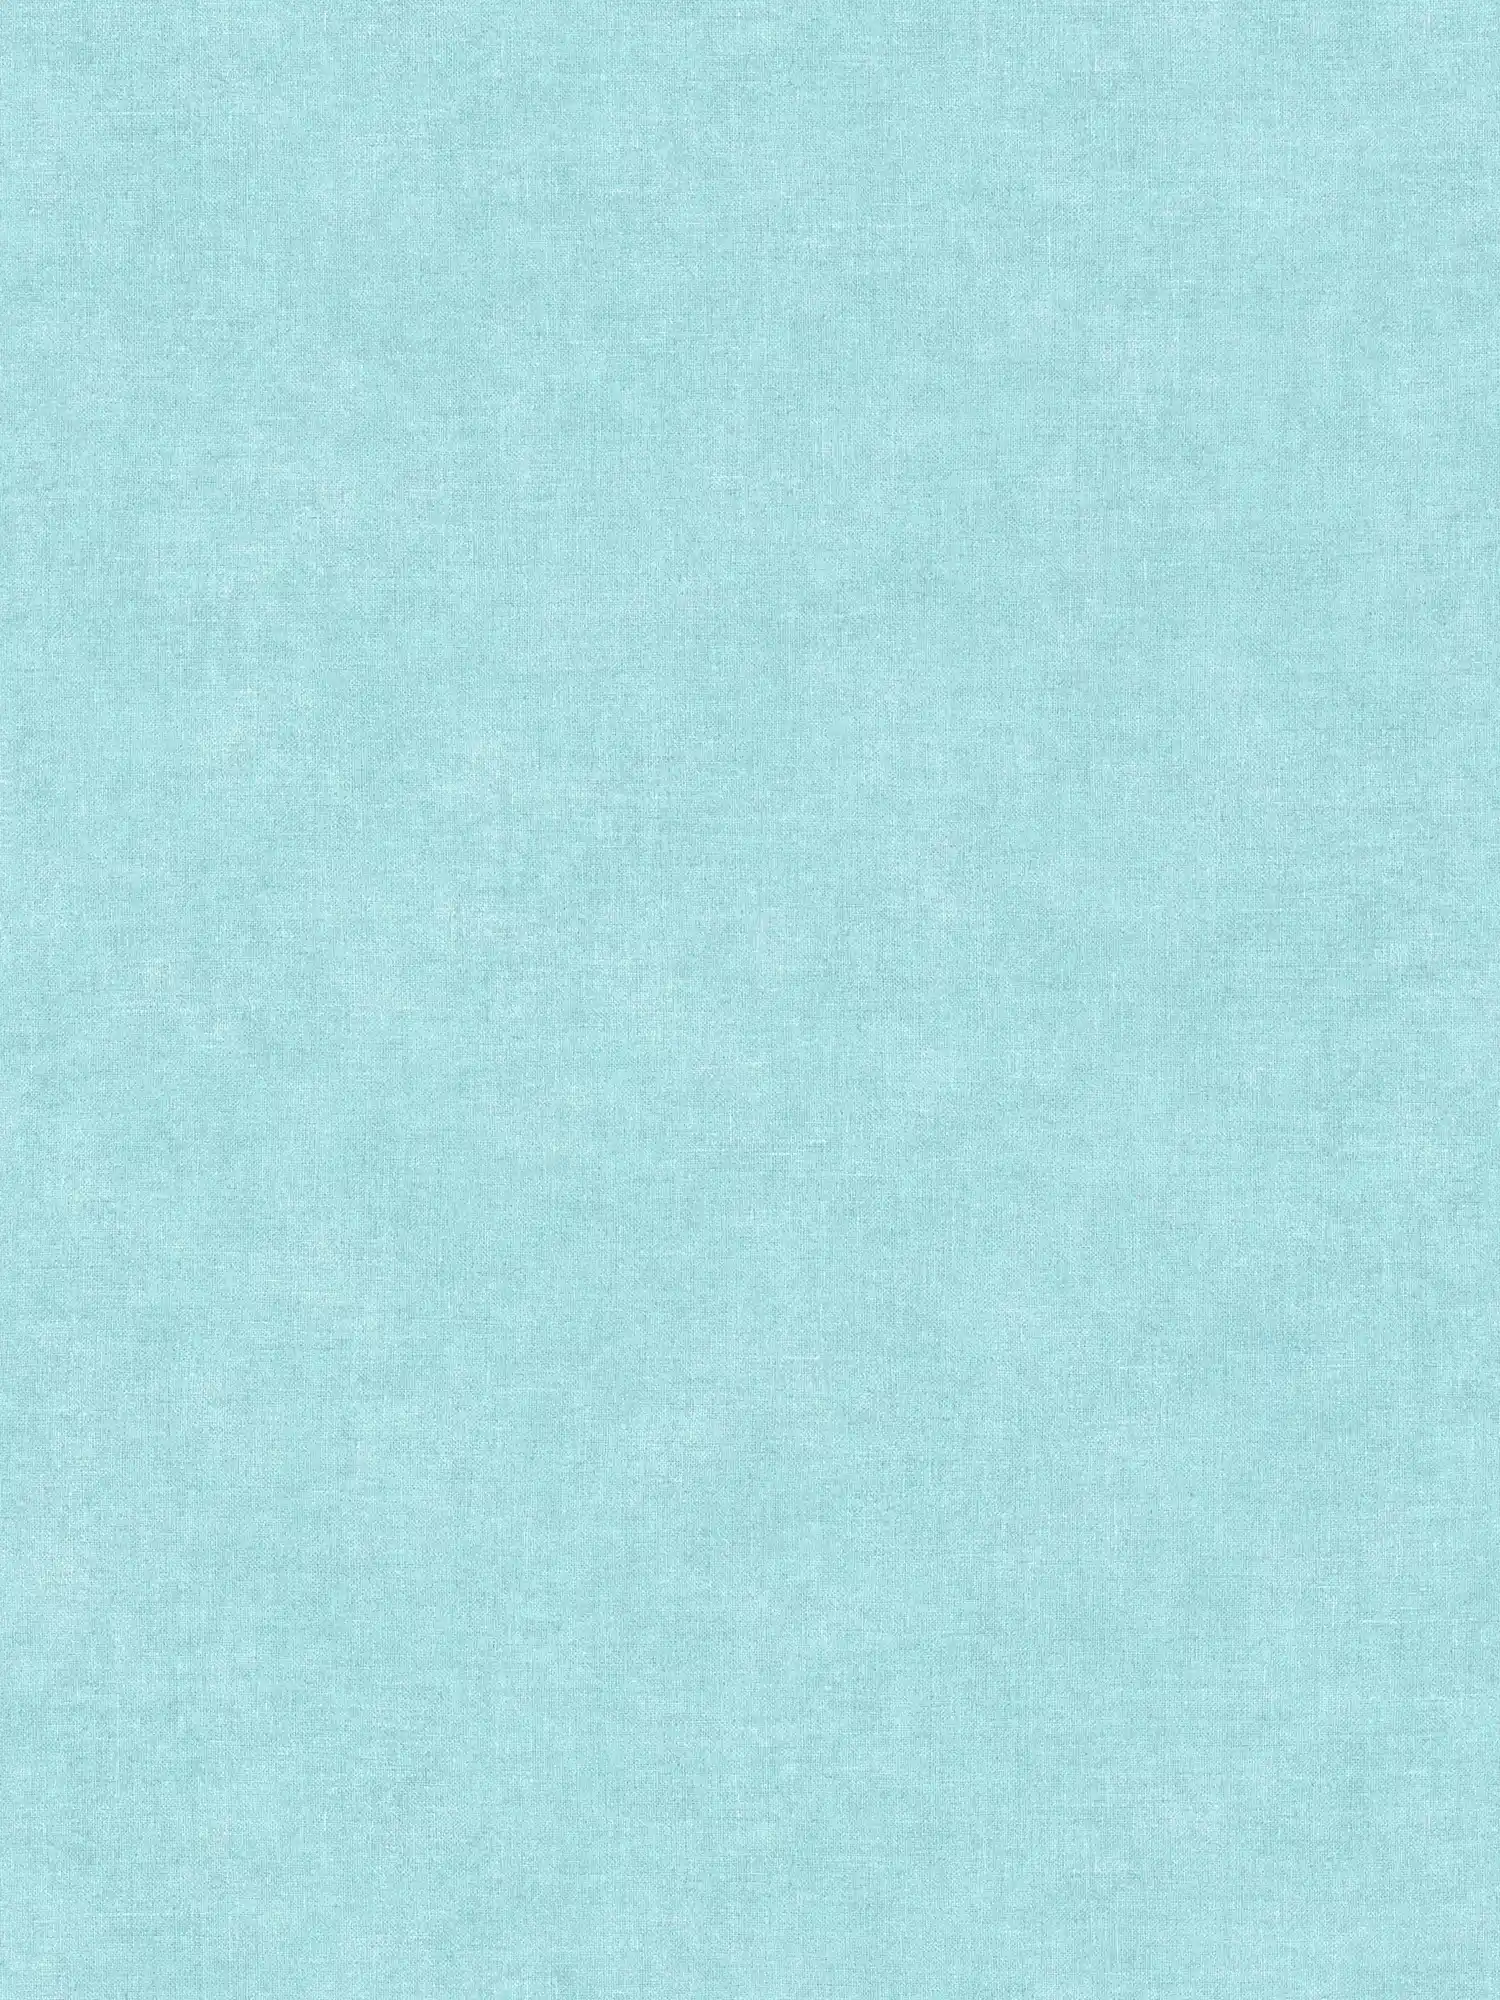 Blue wallpaper plain & matte with texture pattern
